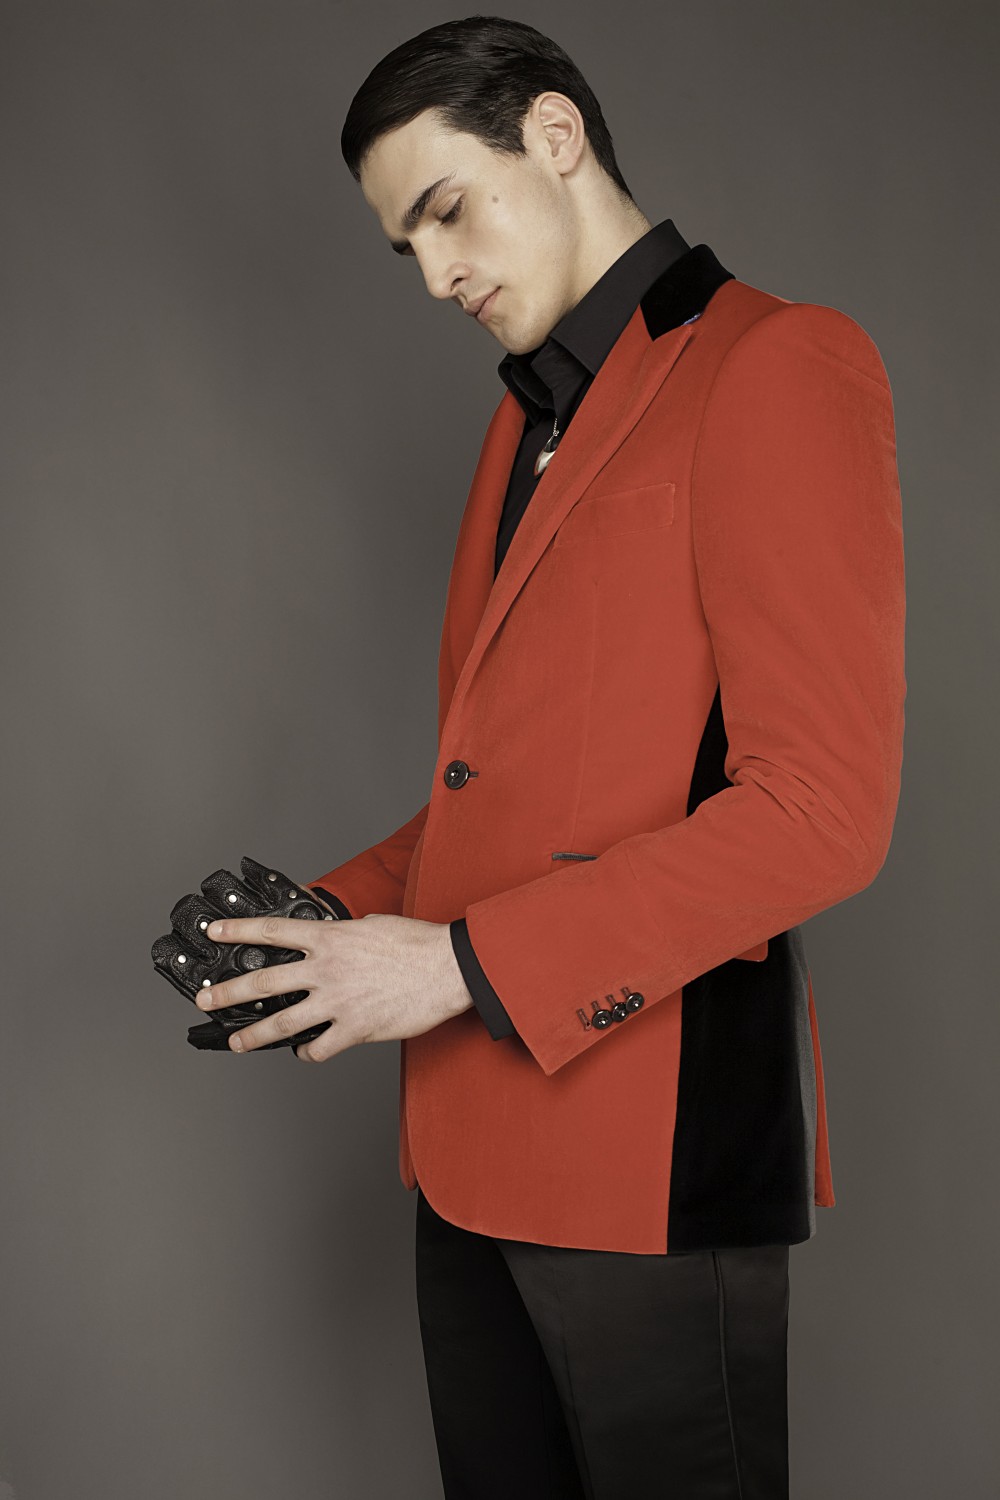 Colour: Red - Black - Grey
Fabric: Cotton velvet
Lining: Viscose